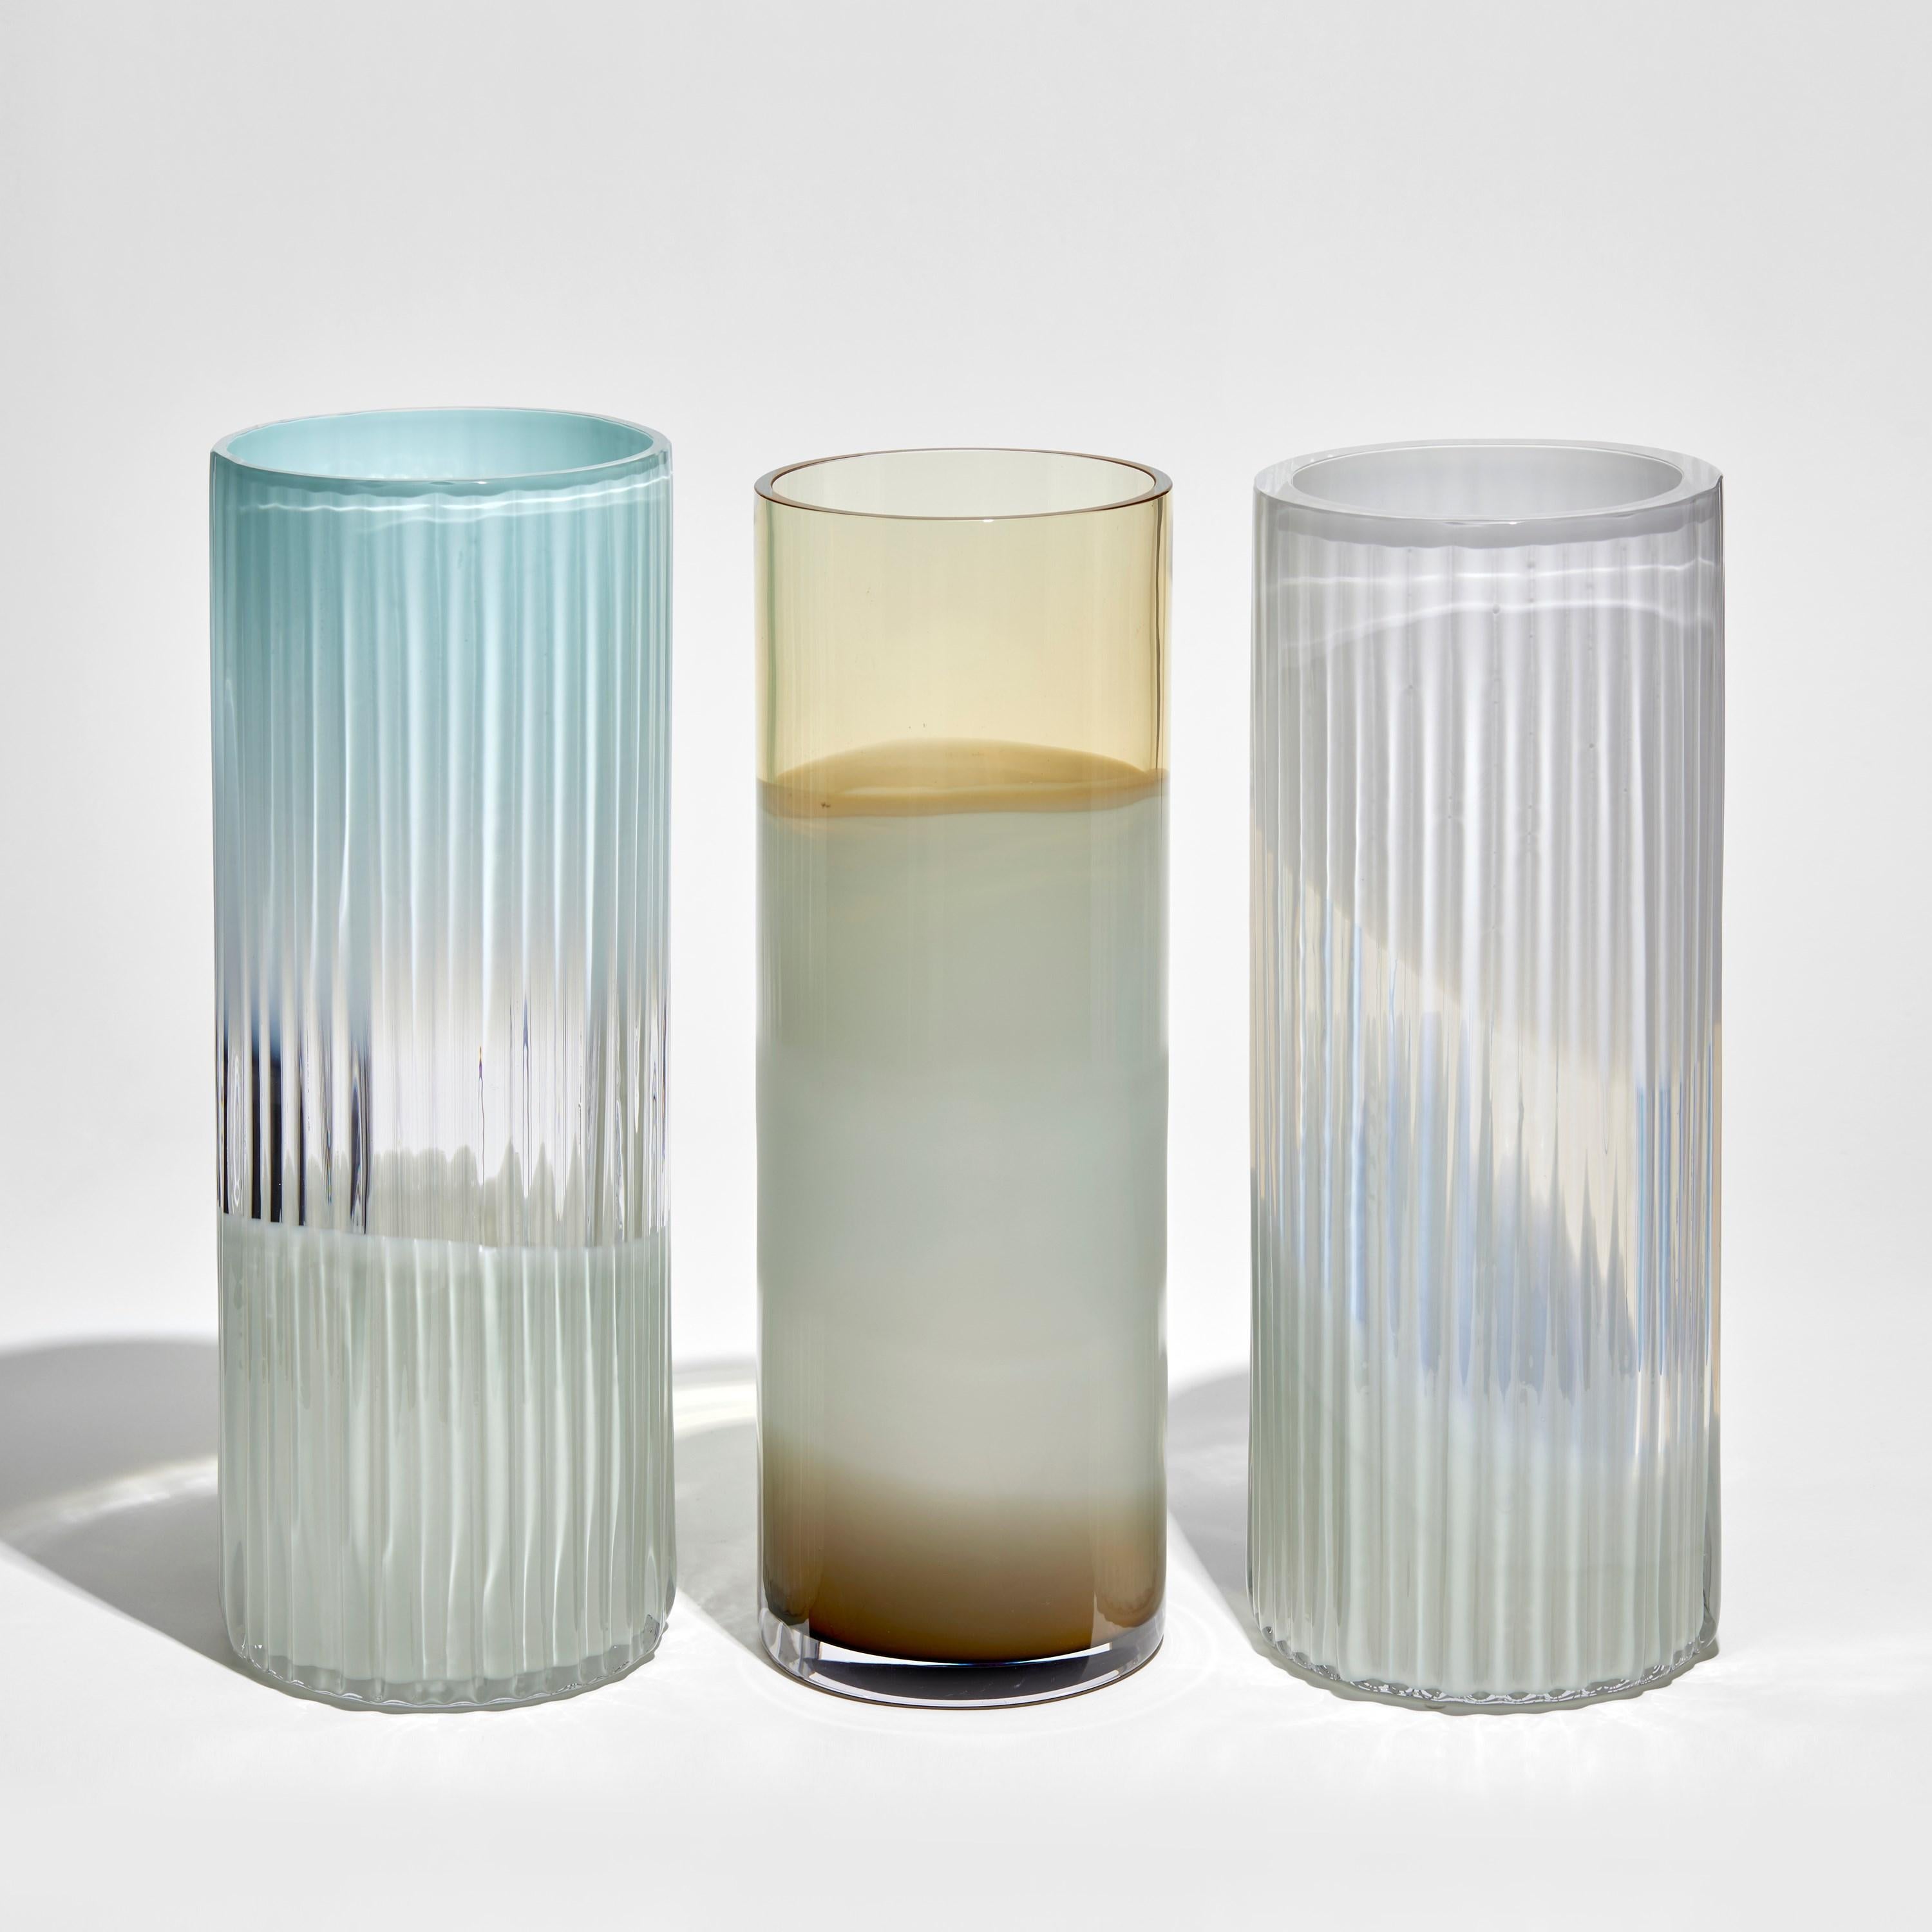 Organic Modern Plissé vase in White & Celadon, a glass vase by Lena Bergström For Sale